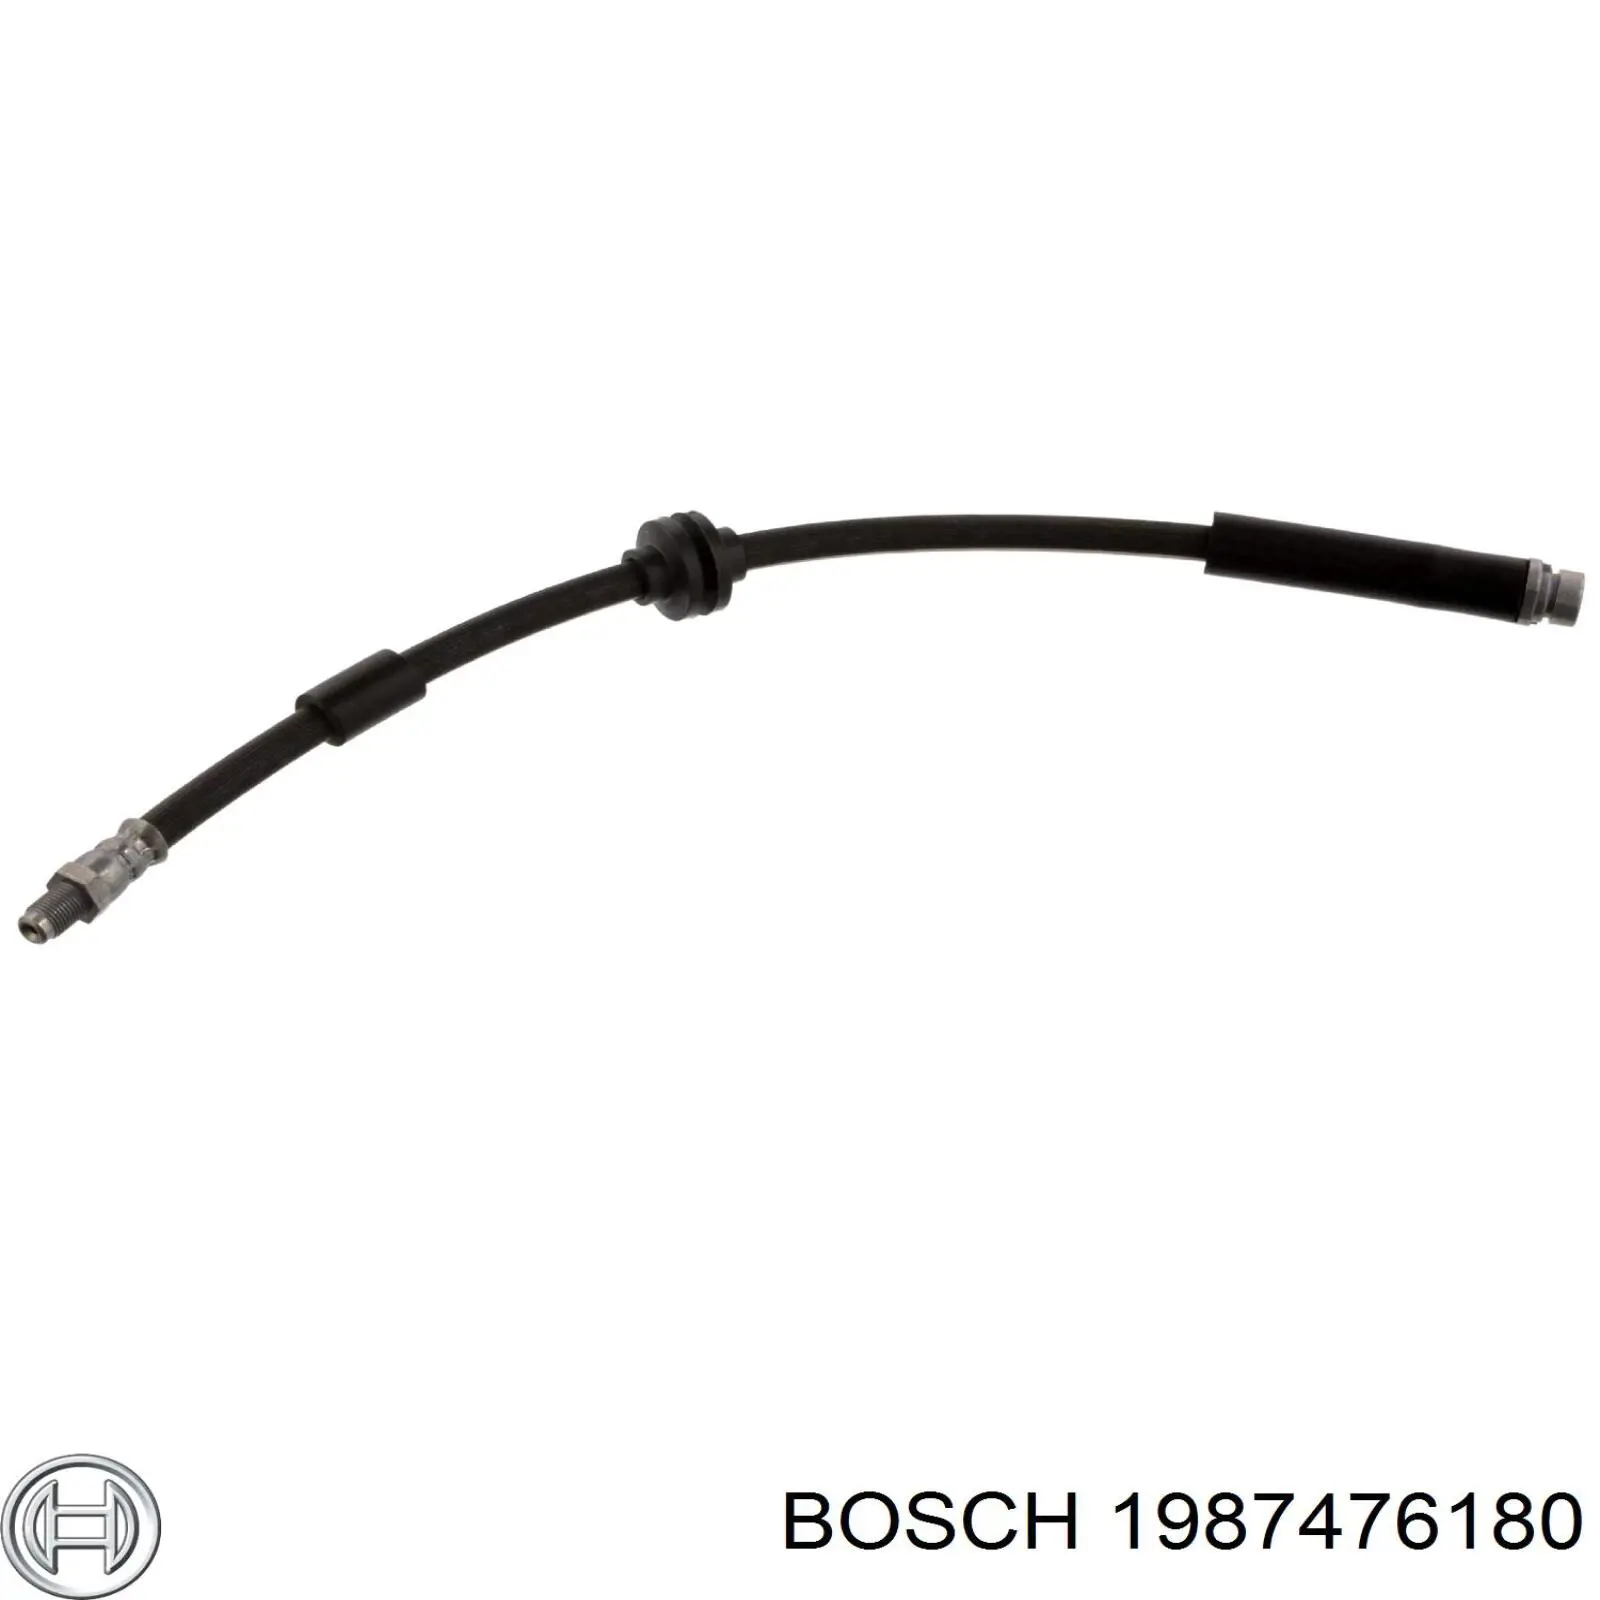 1987476180 Bosch latiguillo de freno trasero